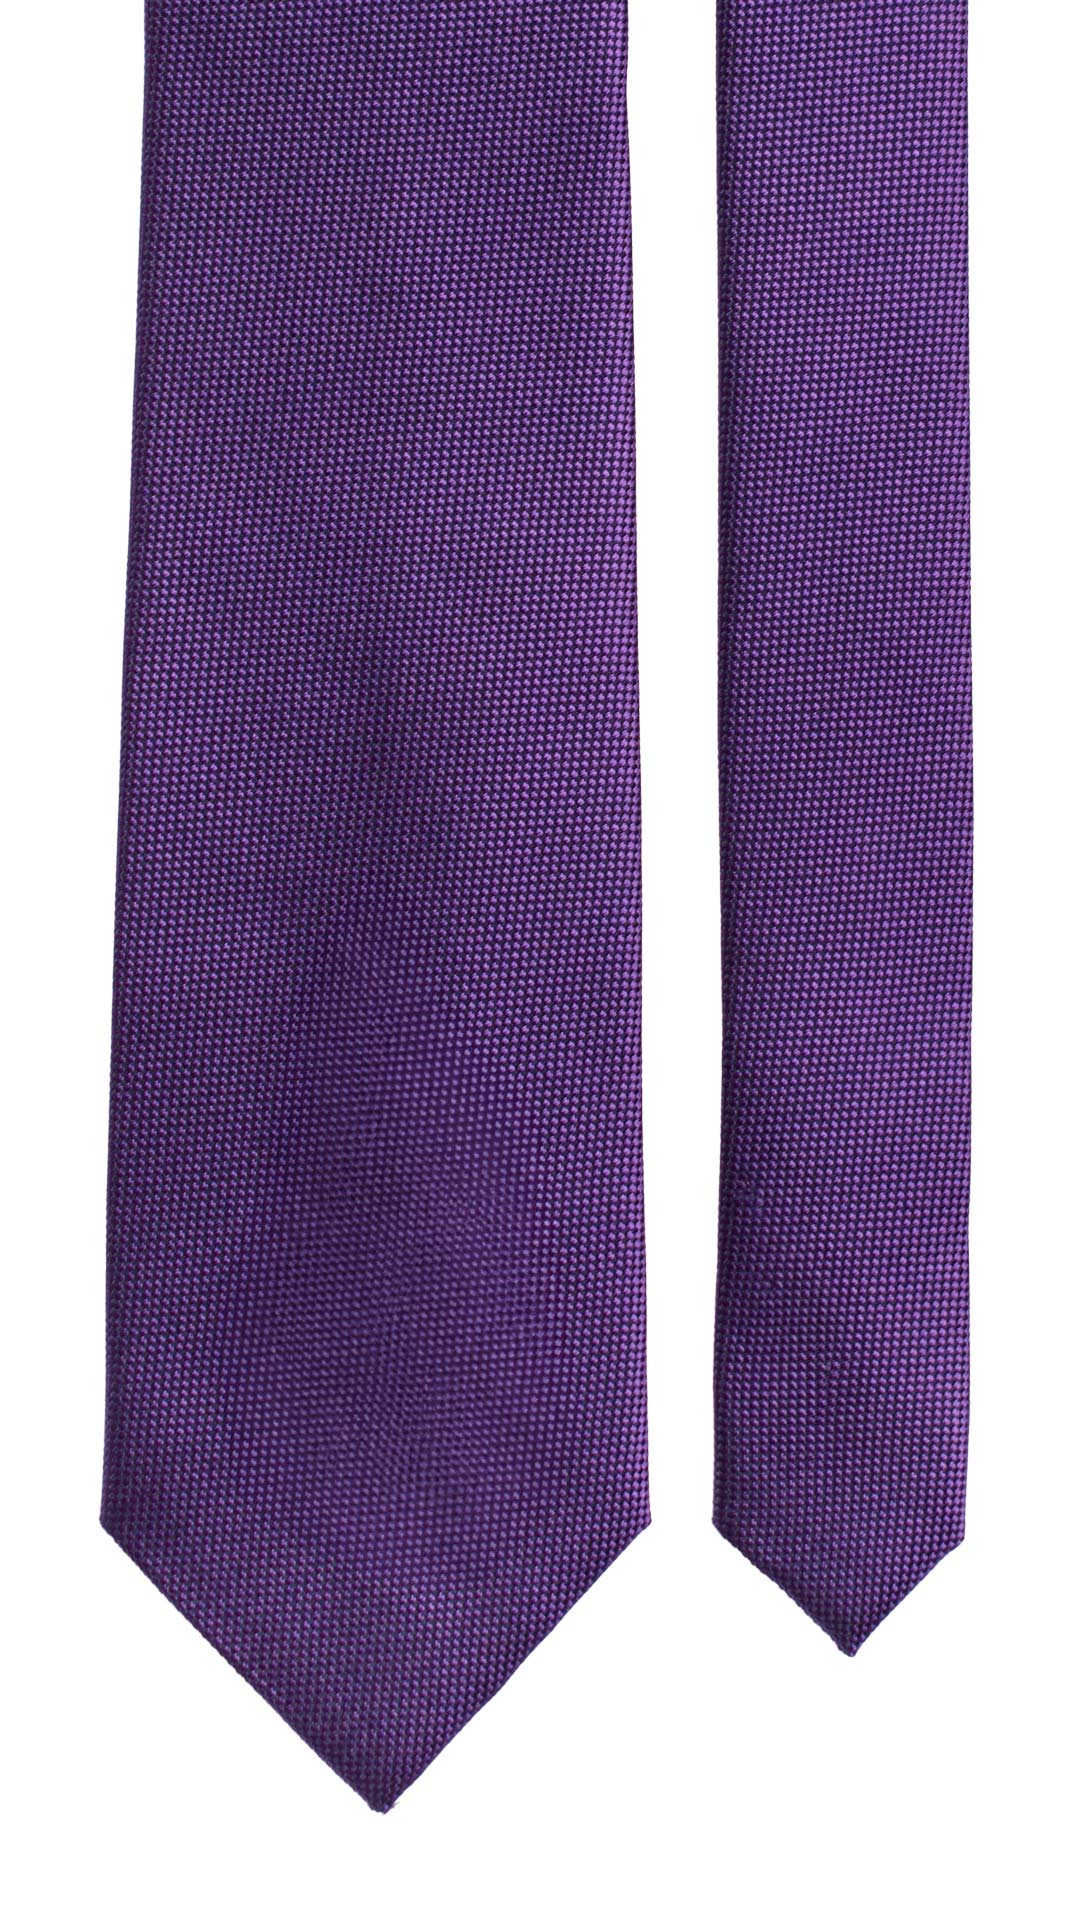 Cravatta di Seta Viola Tinta Unita 7028 Pala